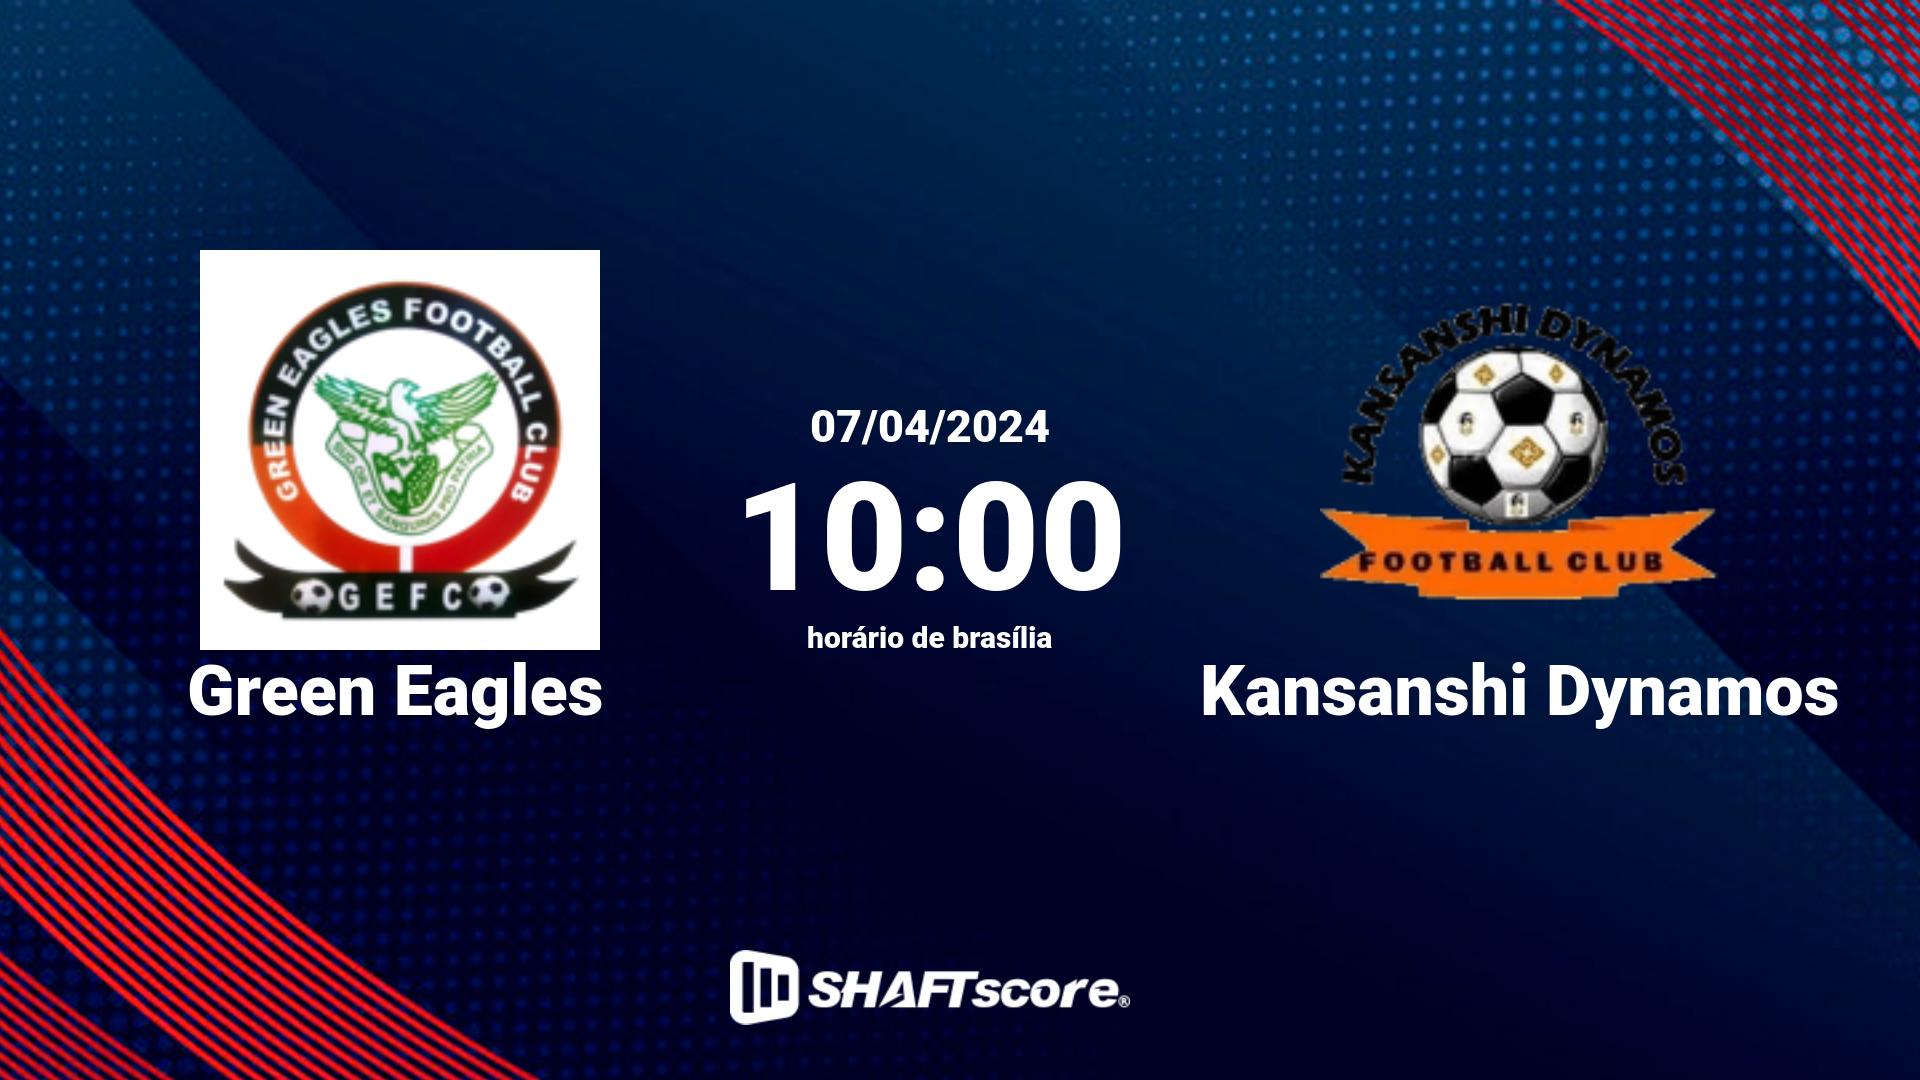 Estatísticas do jogo Green Eagles vs Kansanshi Dynamos 07.04 10:00